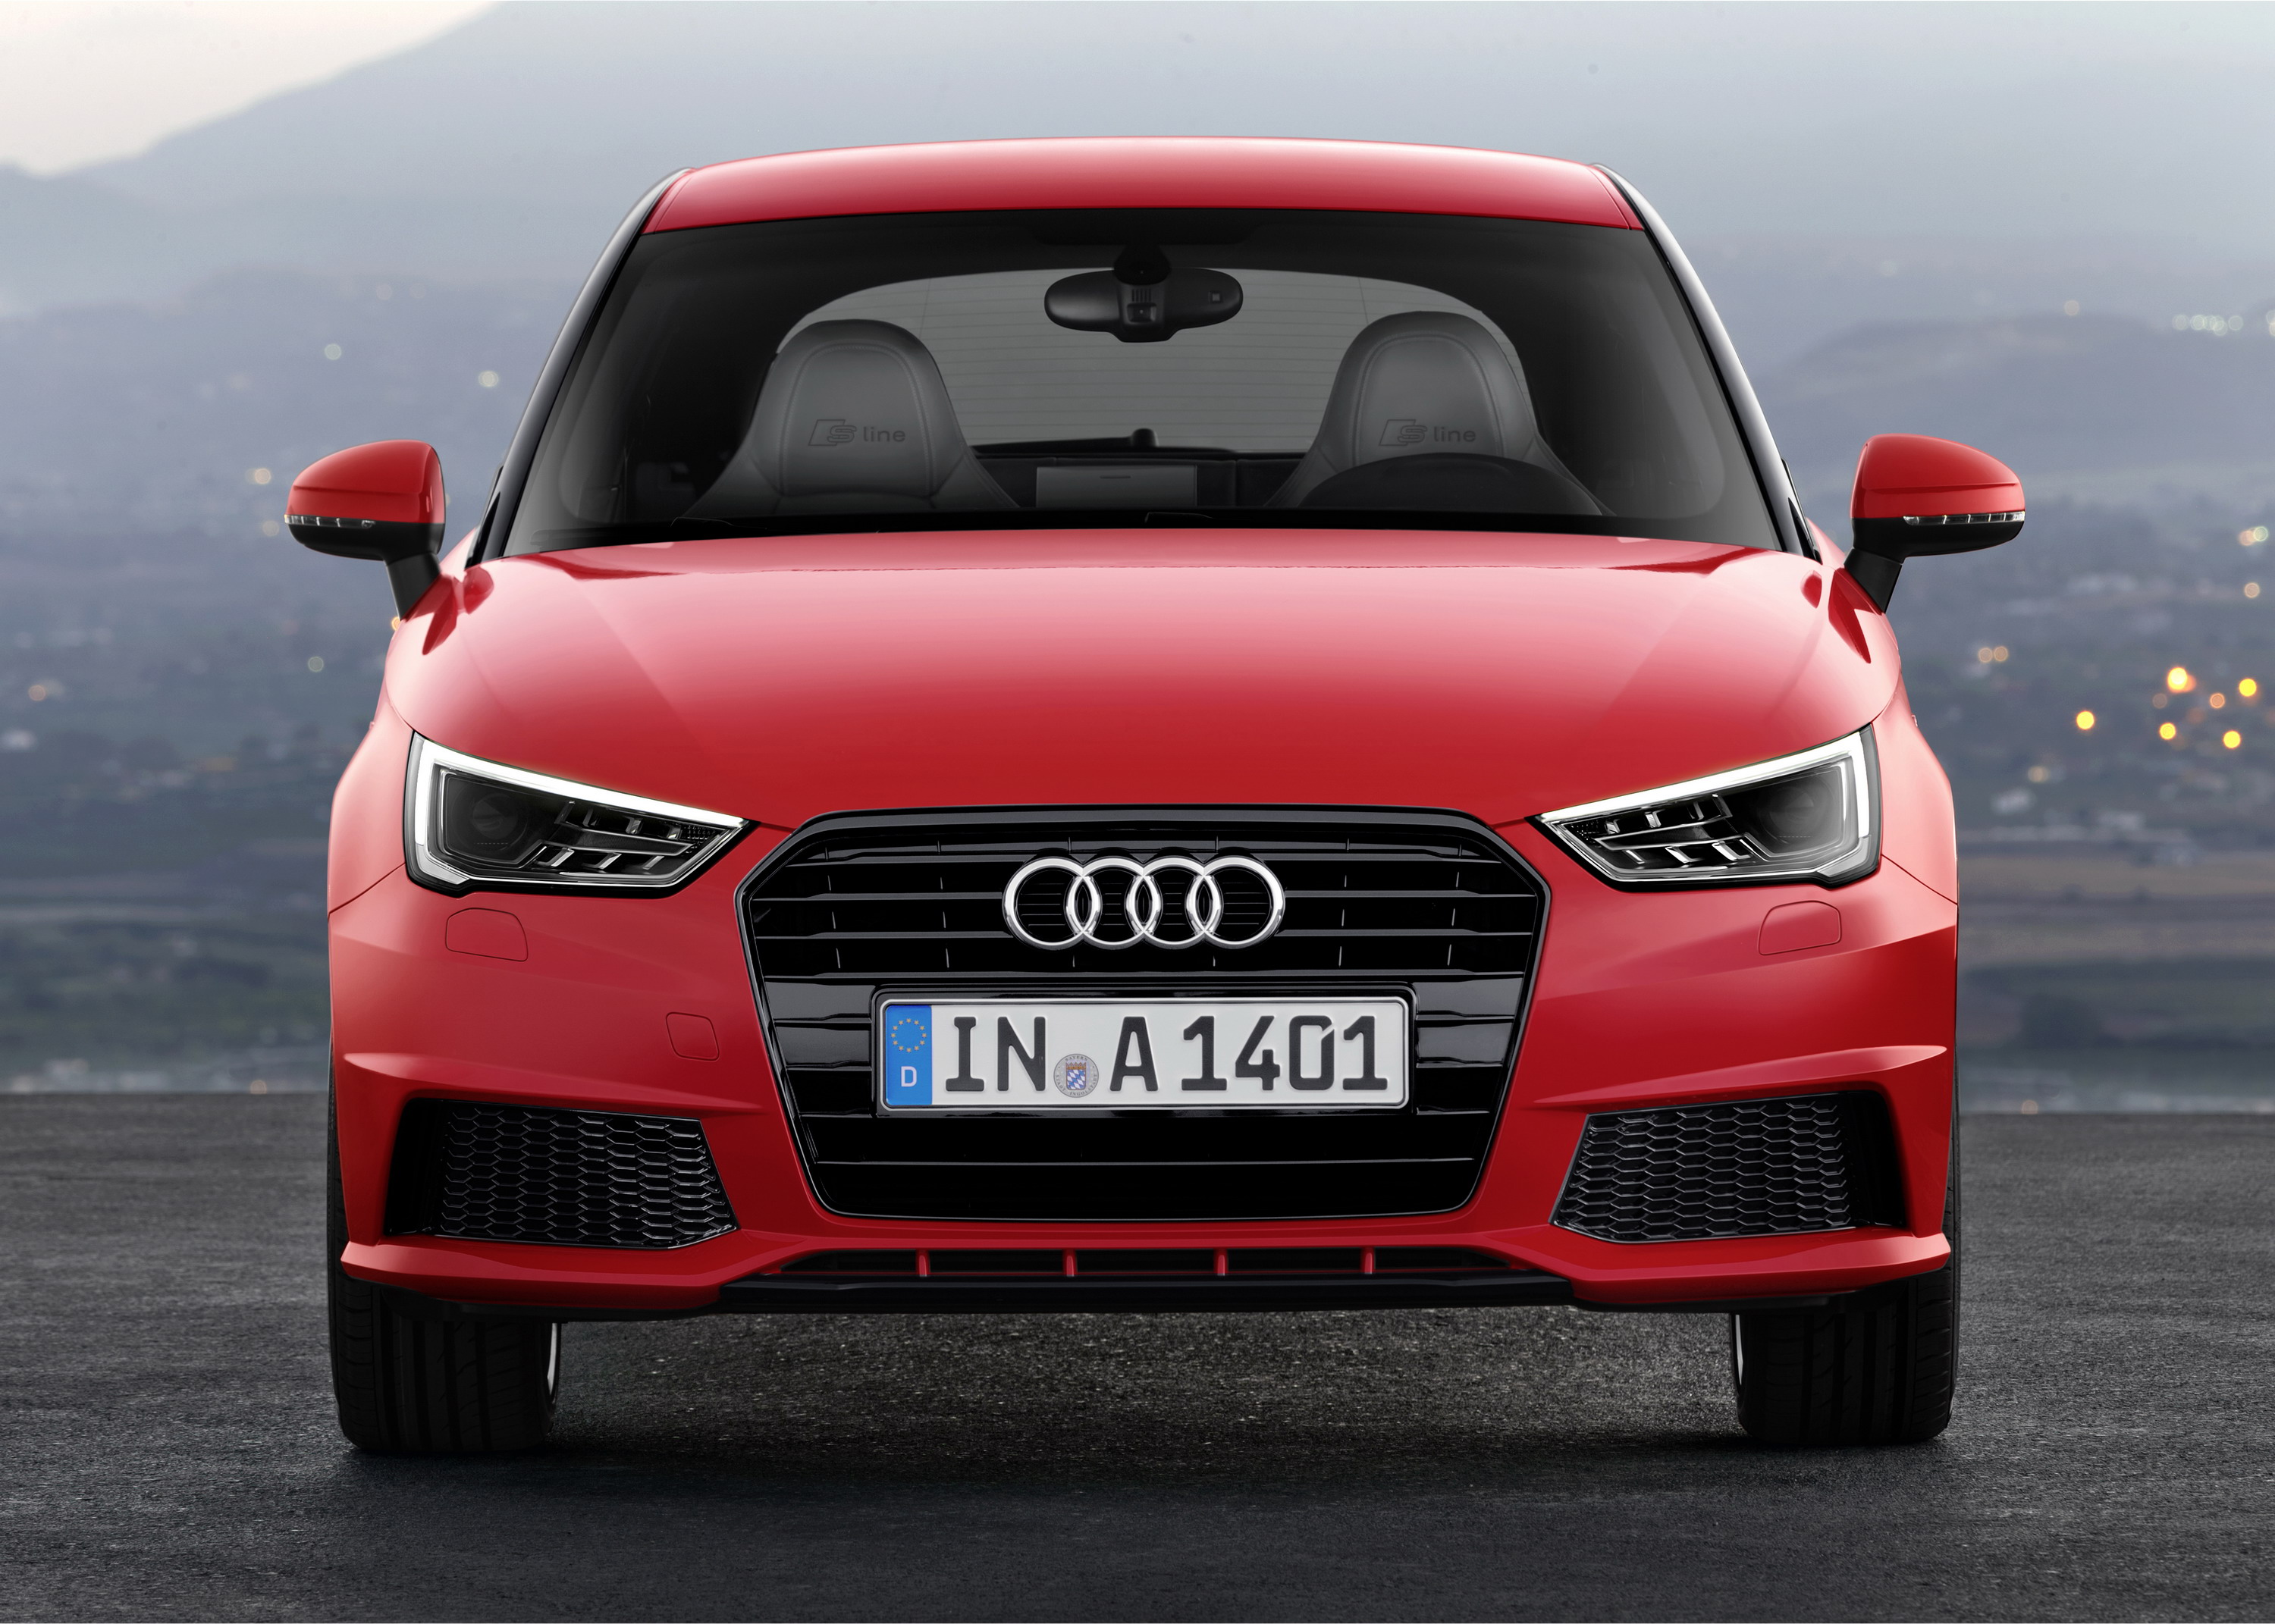 Audi A1 mod photo